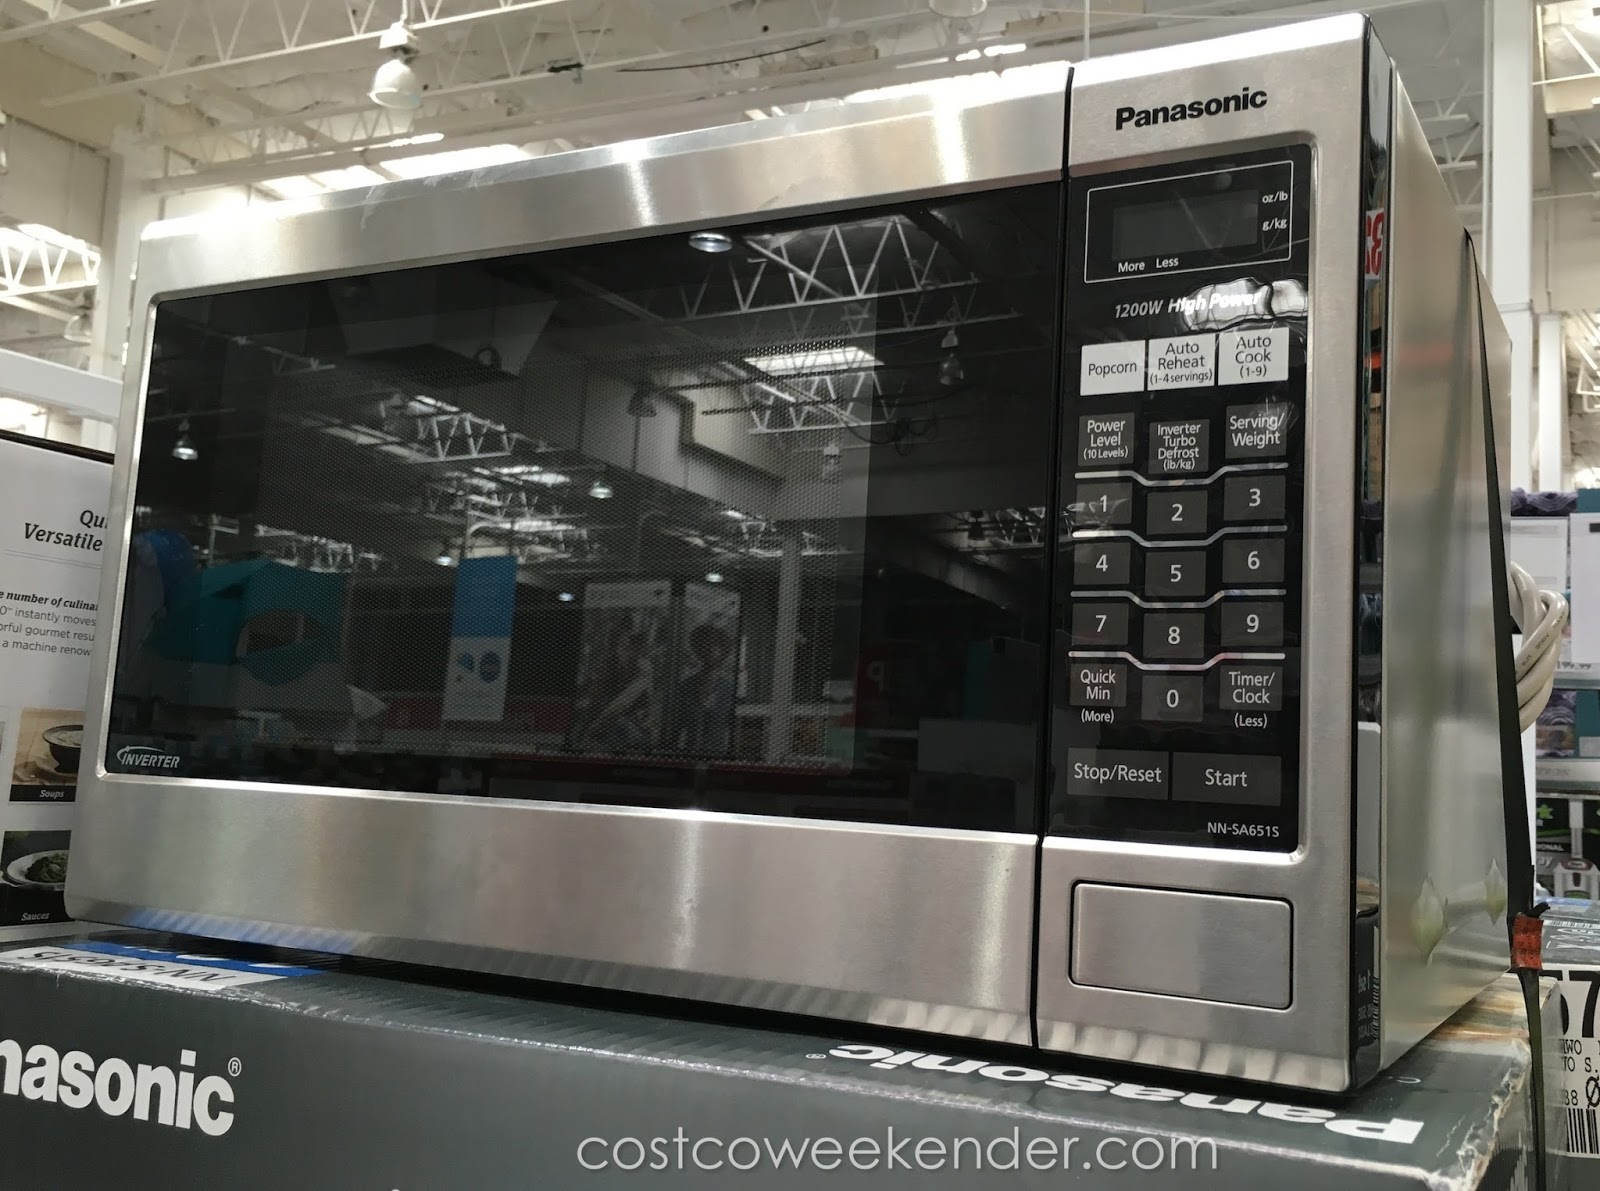 Panasonic Microwave Costco PriceBestMicrowave